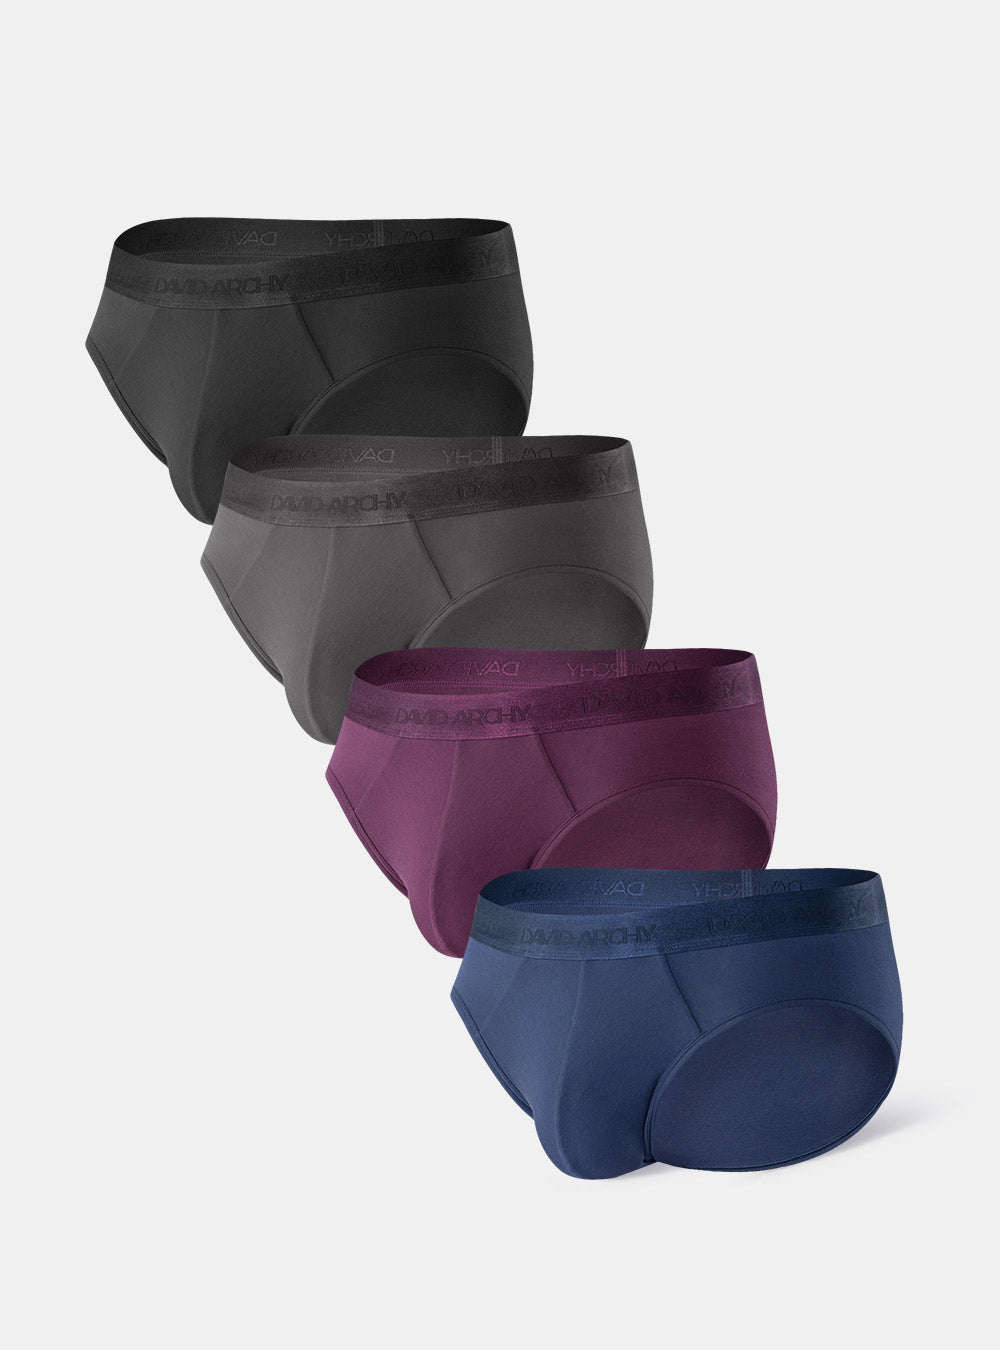 DAVID ARCHY Men's Underwear Bamboo Rayon Breathable Ultra Soft Comfort  Lightweig